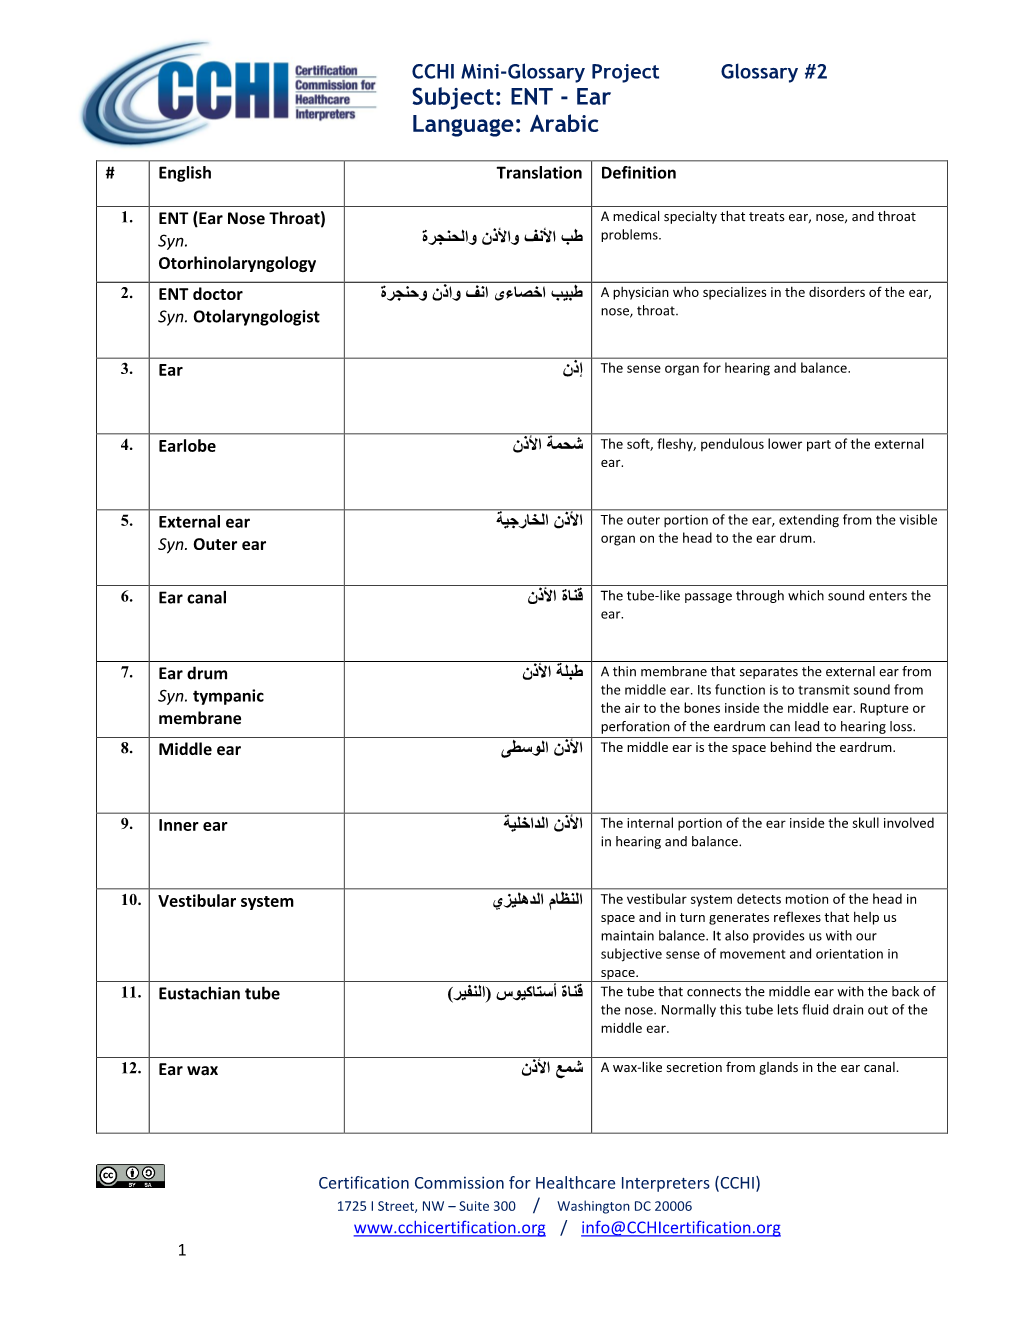 Subject: ENT - Ear Language: Arabic